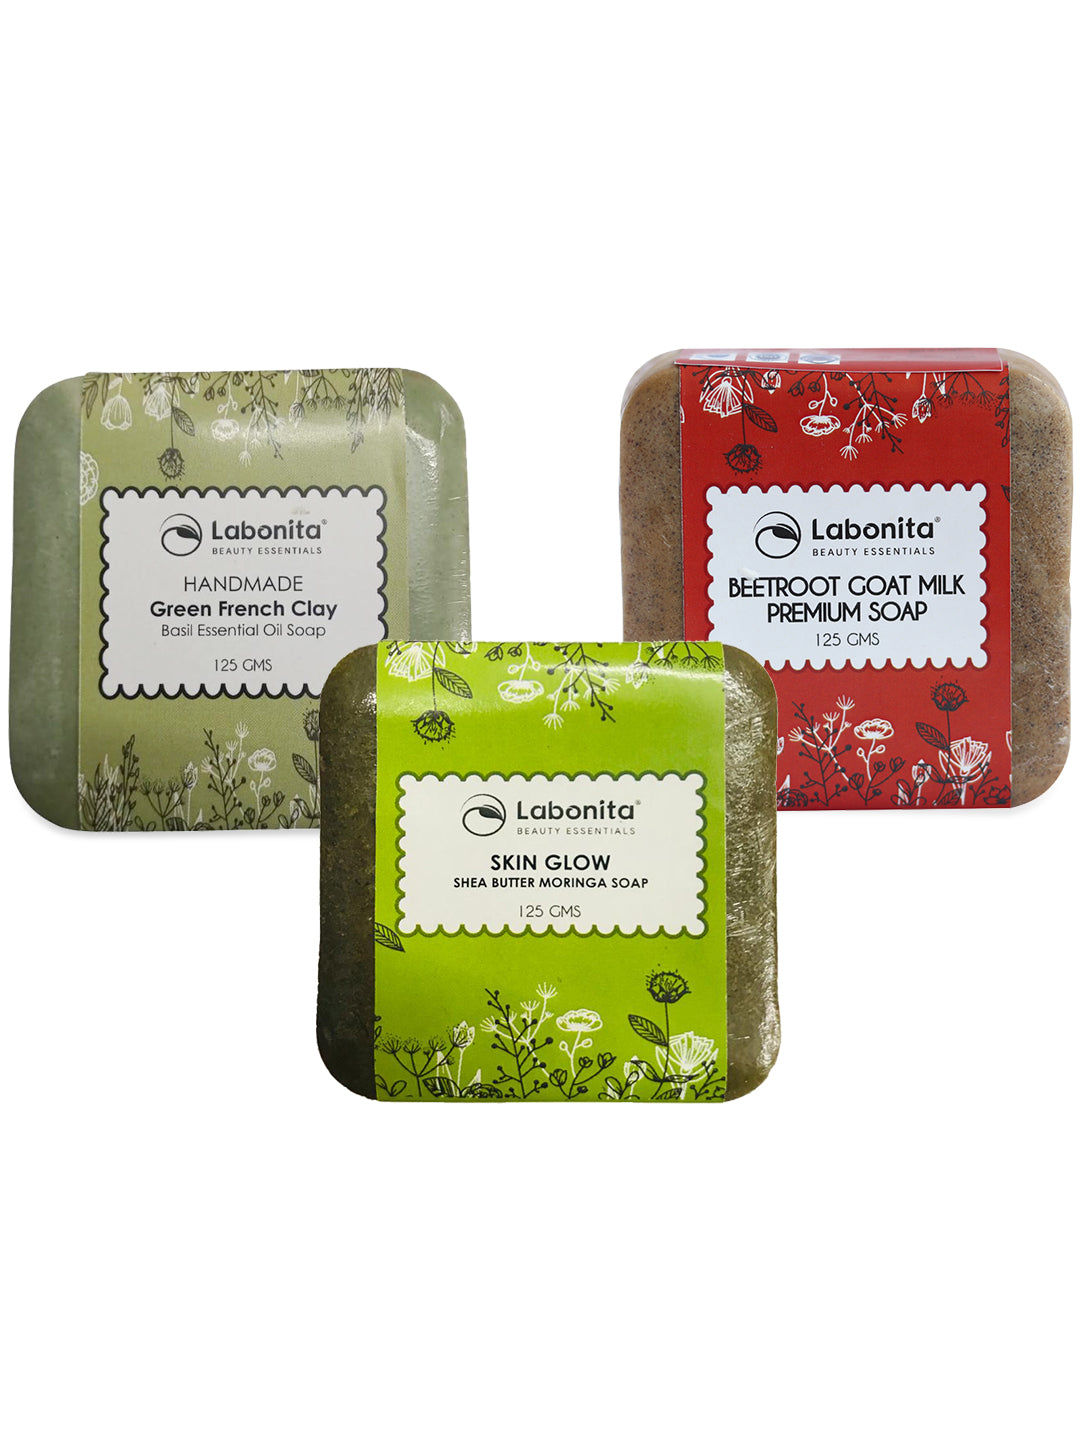 Deep-moisturizing Soap Combo Pack of Green French, Beetroot Goat Milk, Shea Butter Moringa Soap